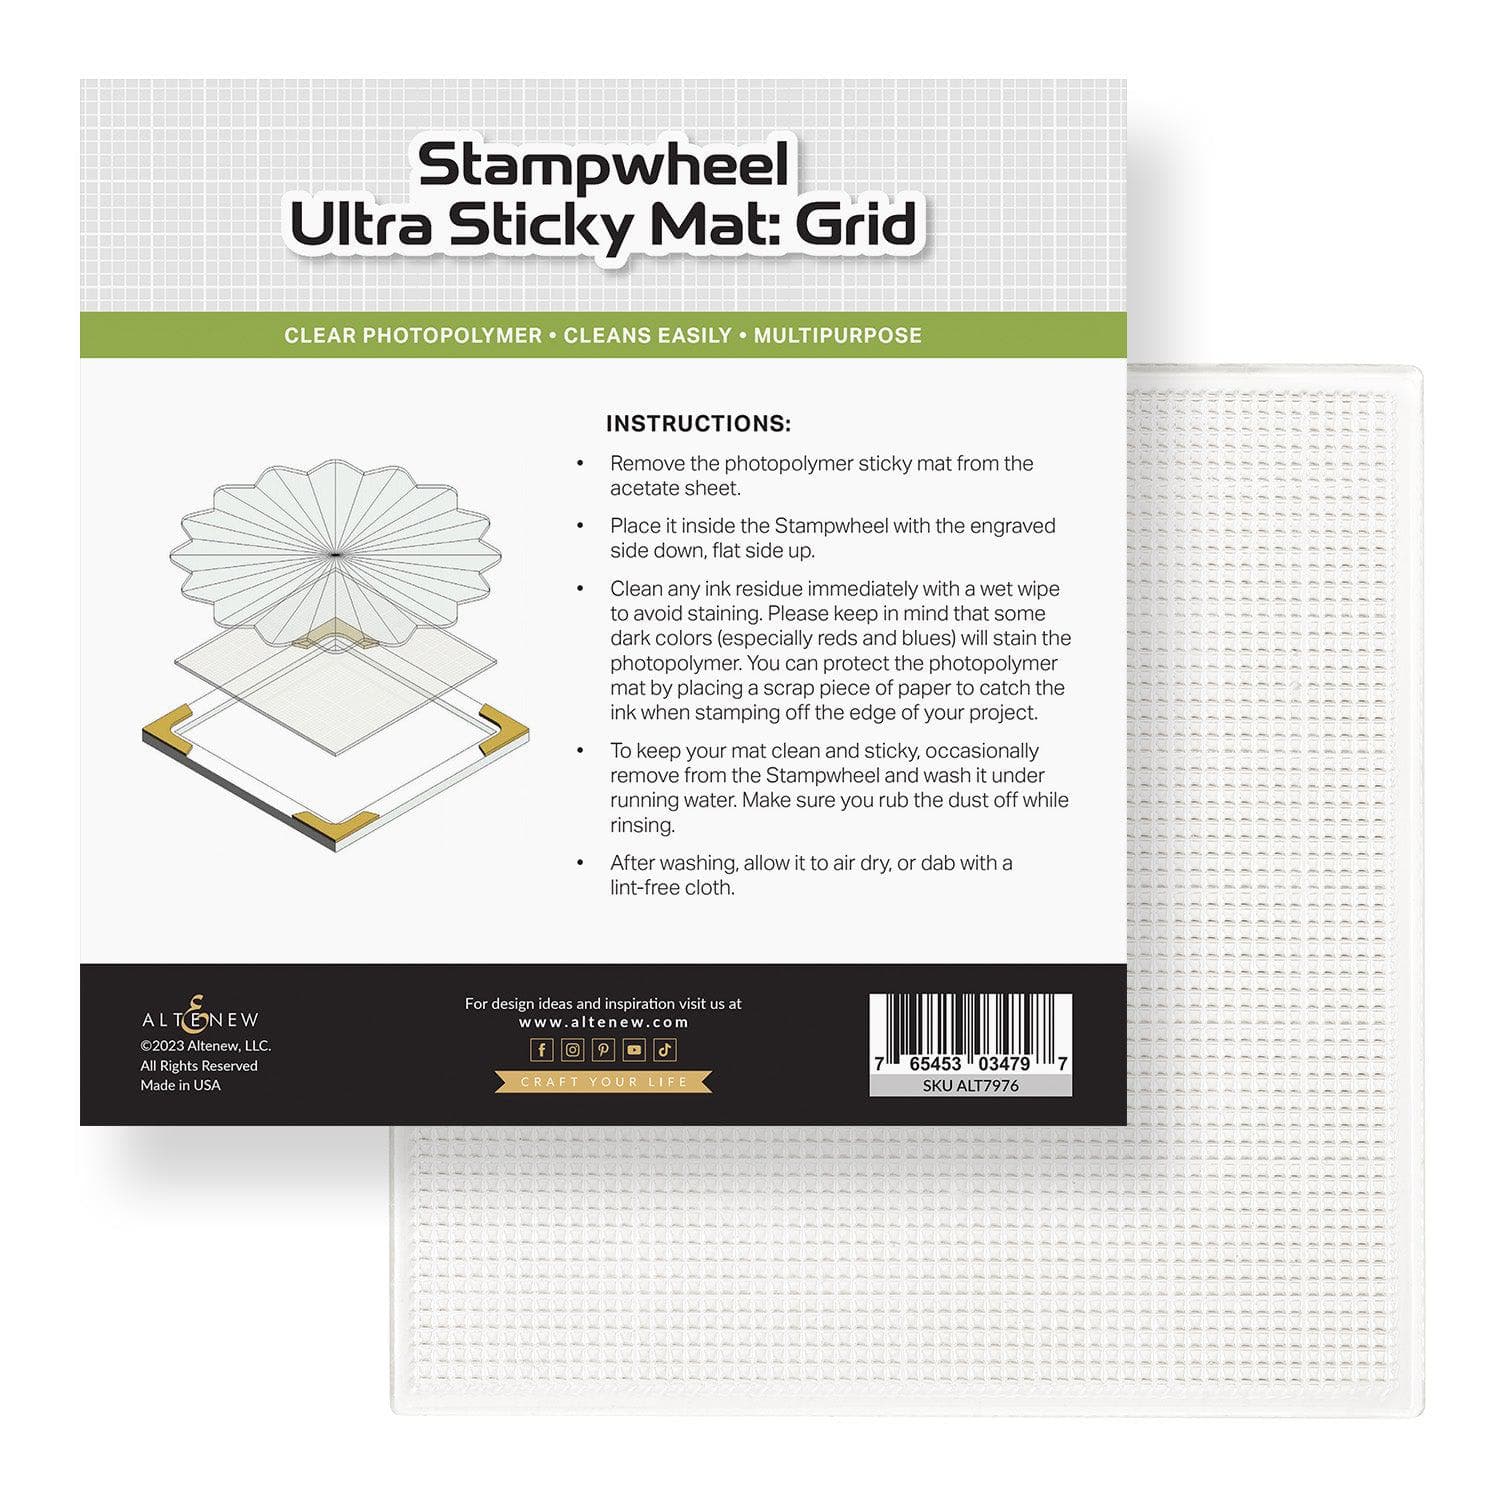 Stampwheel Ultra Sticky Mat: Grid